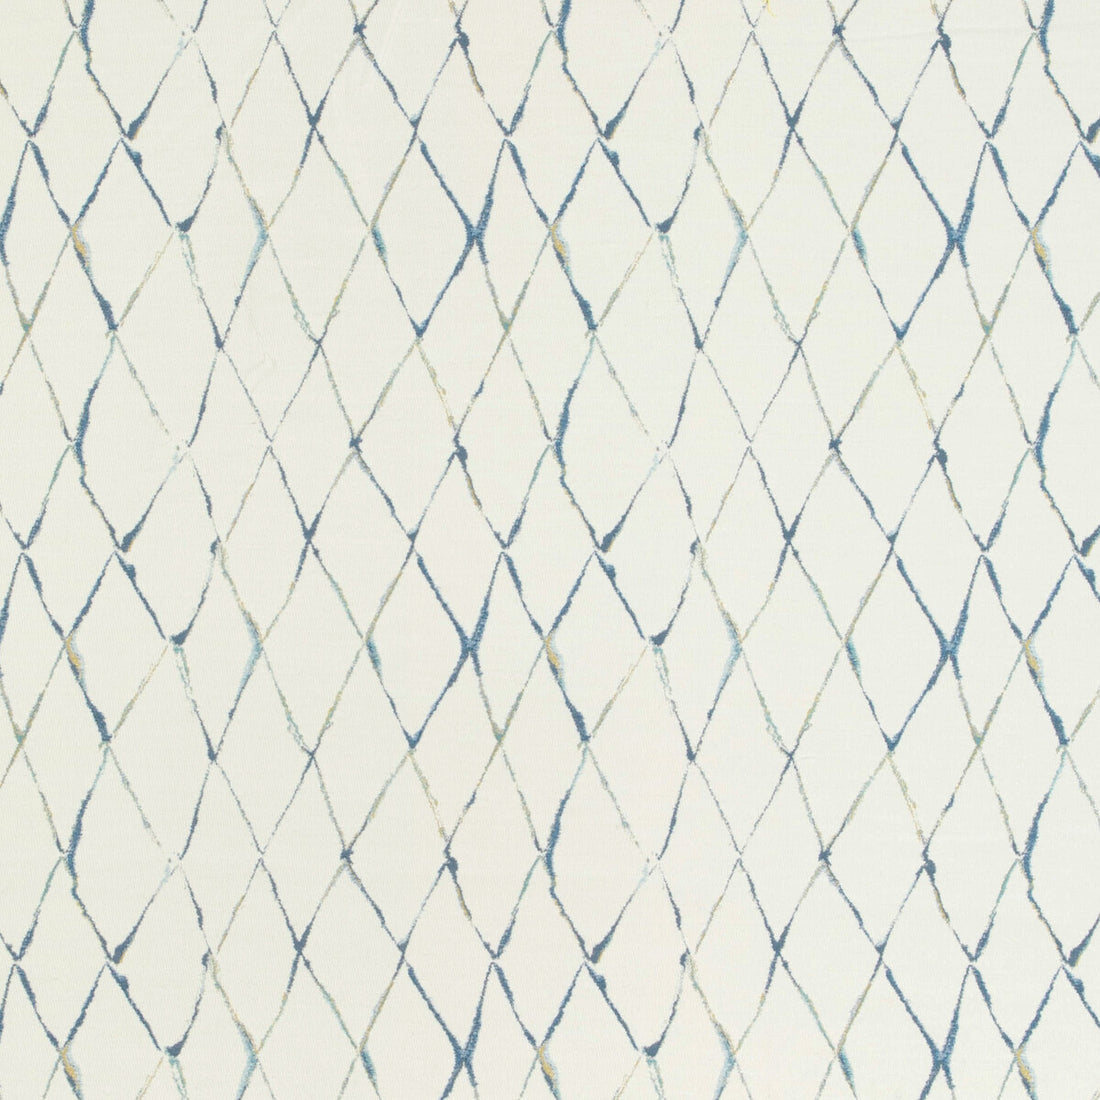 Kravet Design fabric in 36773-535 color - pattern 36773.535.0 - by Kravet Design in the Sea Island Indoor/Outdoor collection